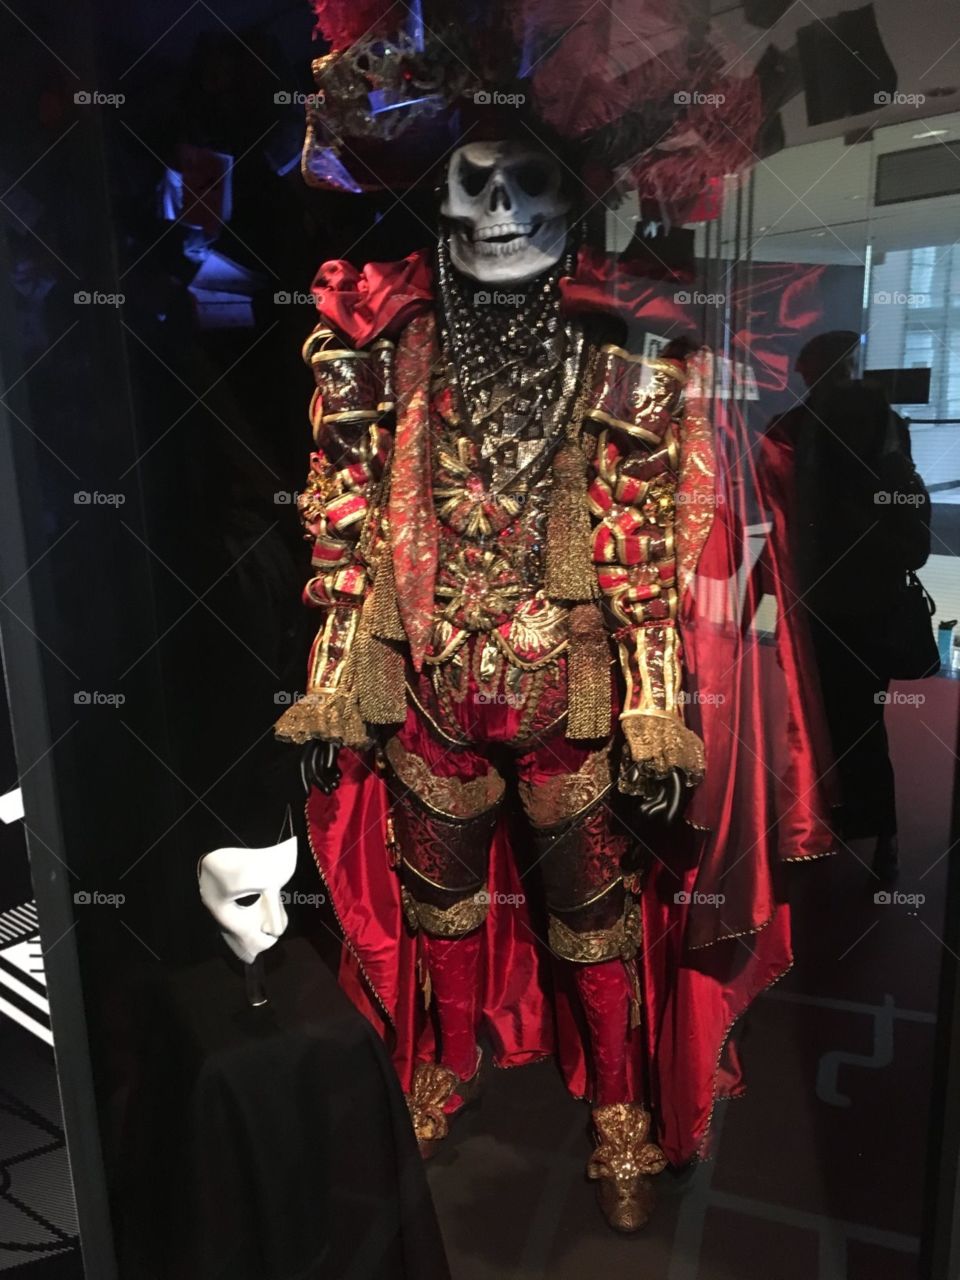 Phantom of the opera costume Lincoln center broadway museum